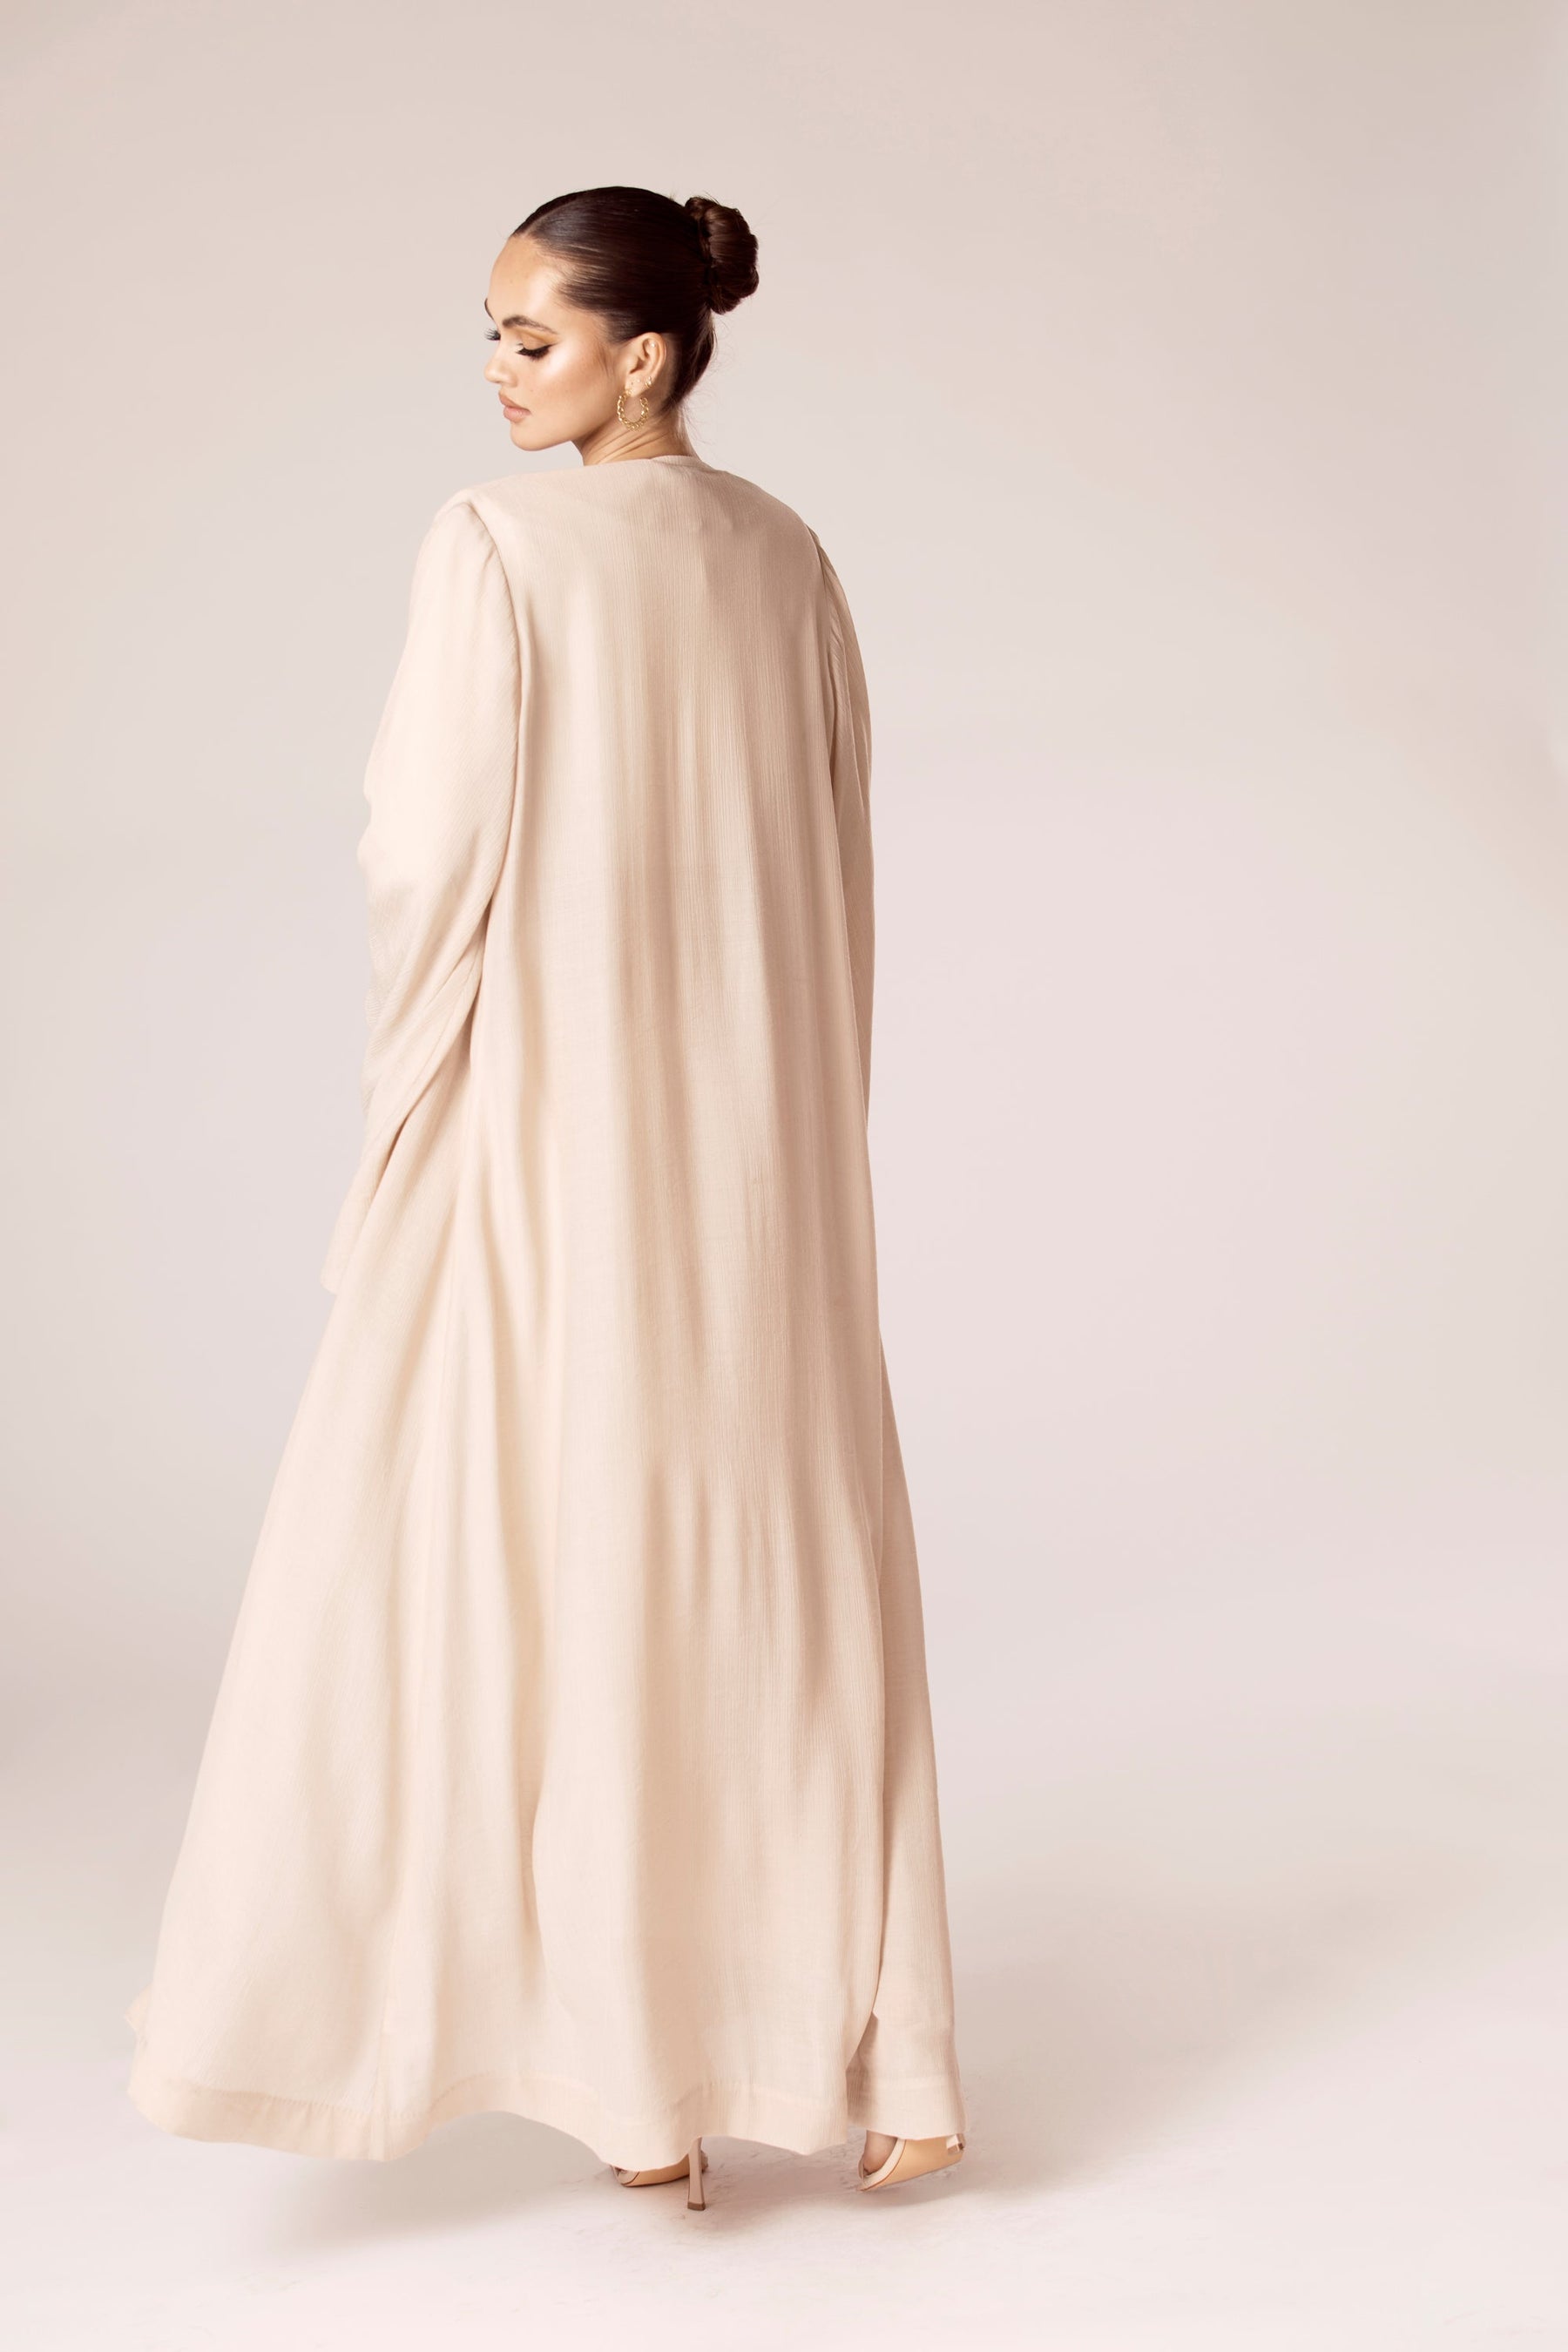 Rana Textured Open Abaya - Sand Beige Veiled Collection 